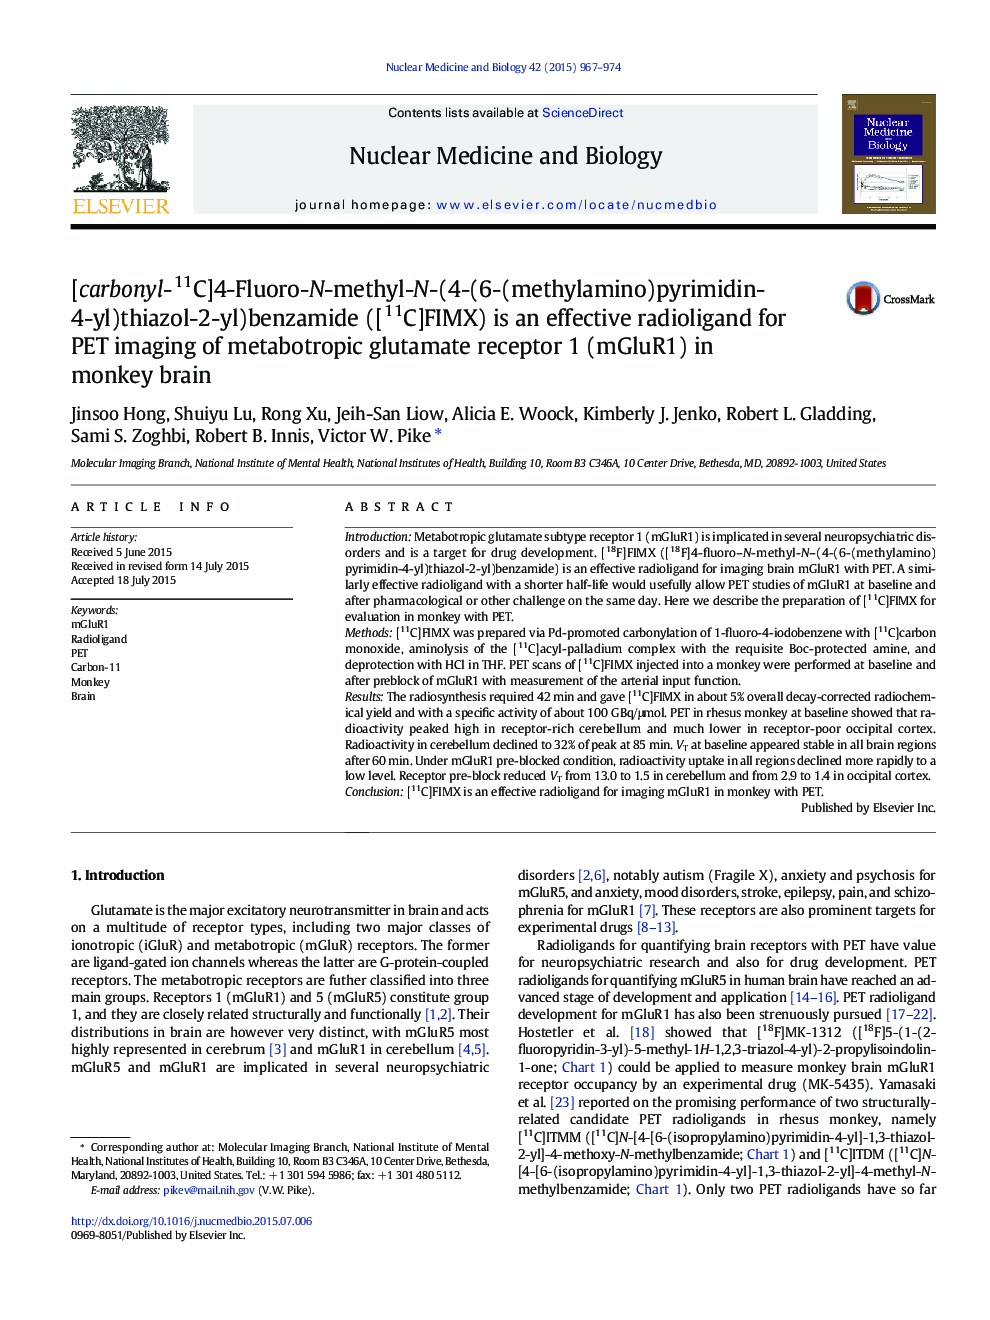 [carbonyl-11C]4-Fluoro-N-methyl-N-(4-(6-(methylamino)pyrimidin-4-yl)thiazol-2-yl)benzamide ([11C]FIMX) is an effective radioligand for PET imaging of metabotropic glutamate receptor 1 (mGluR1) in monkey brain